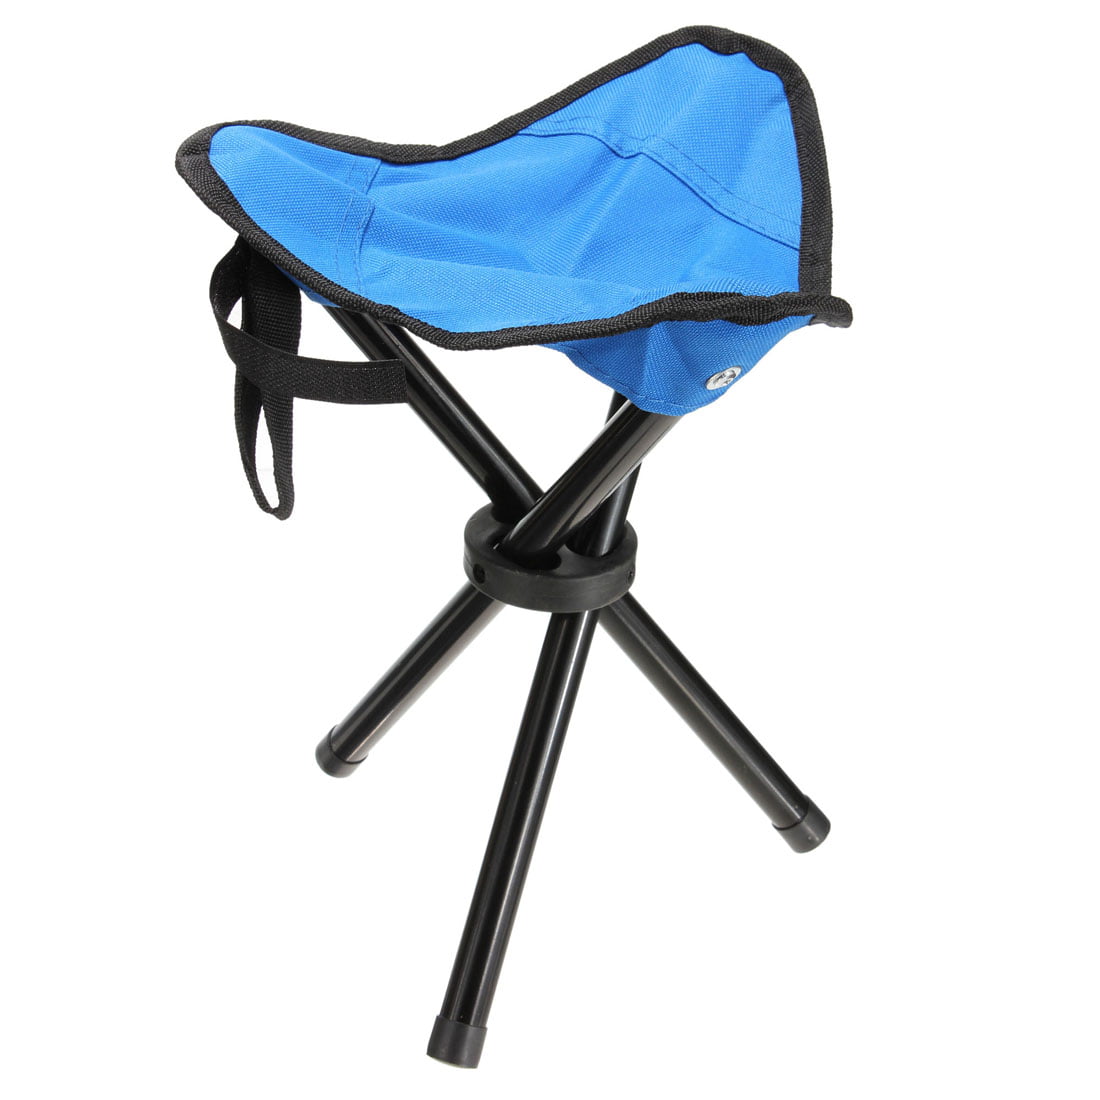 kaakaeu Space-saving 3-legged Folding Stool Portable Multifunctional Foldable Simple Chair for Outdoor Camping Picnic Fishing 